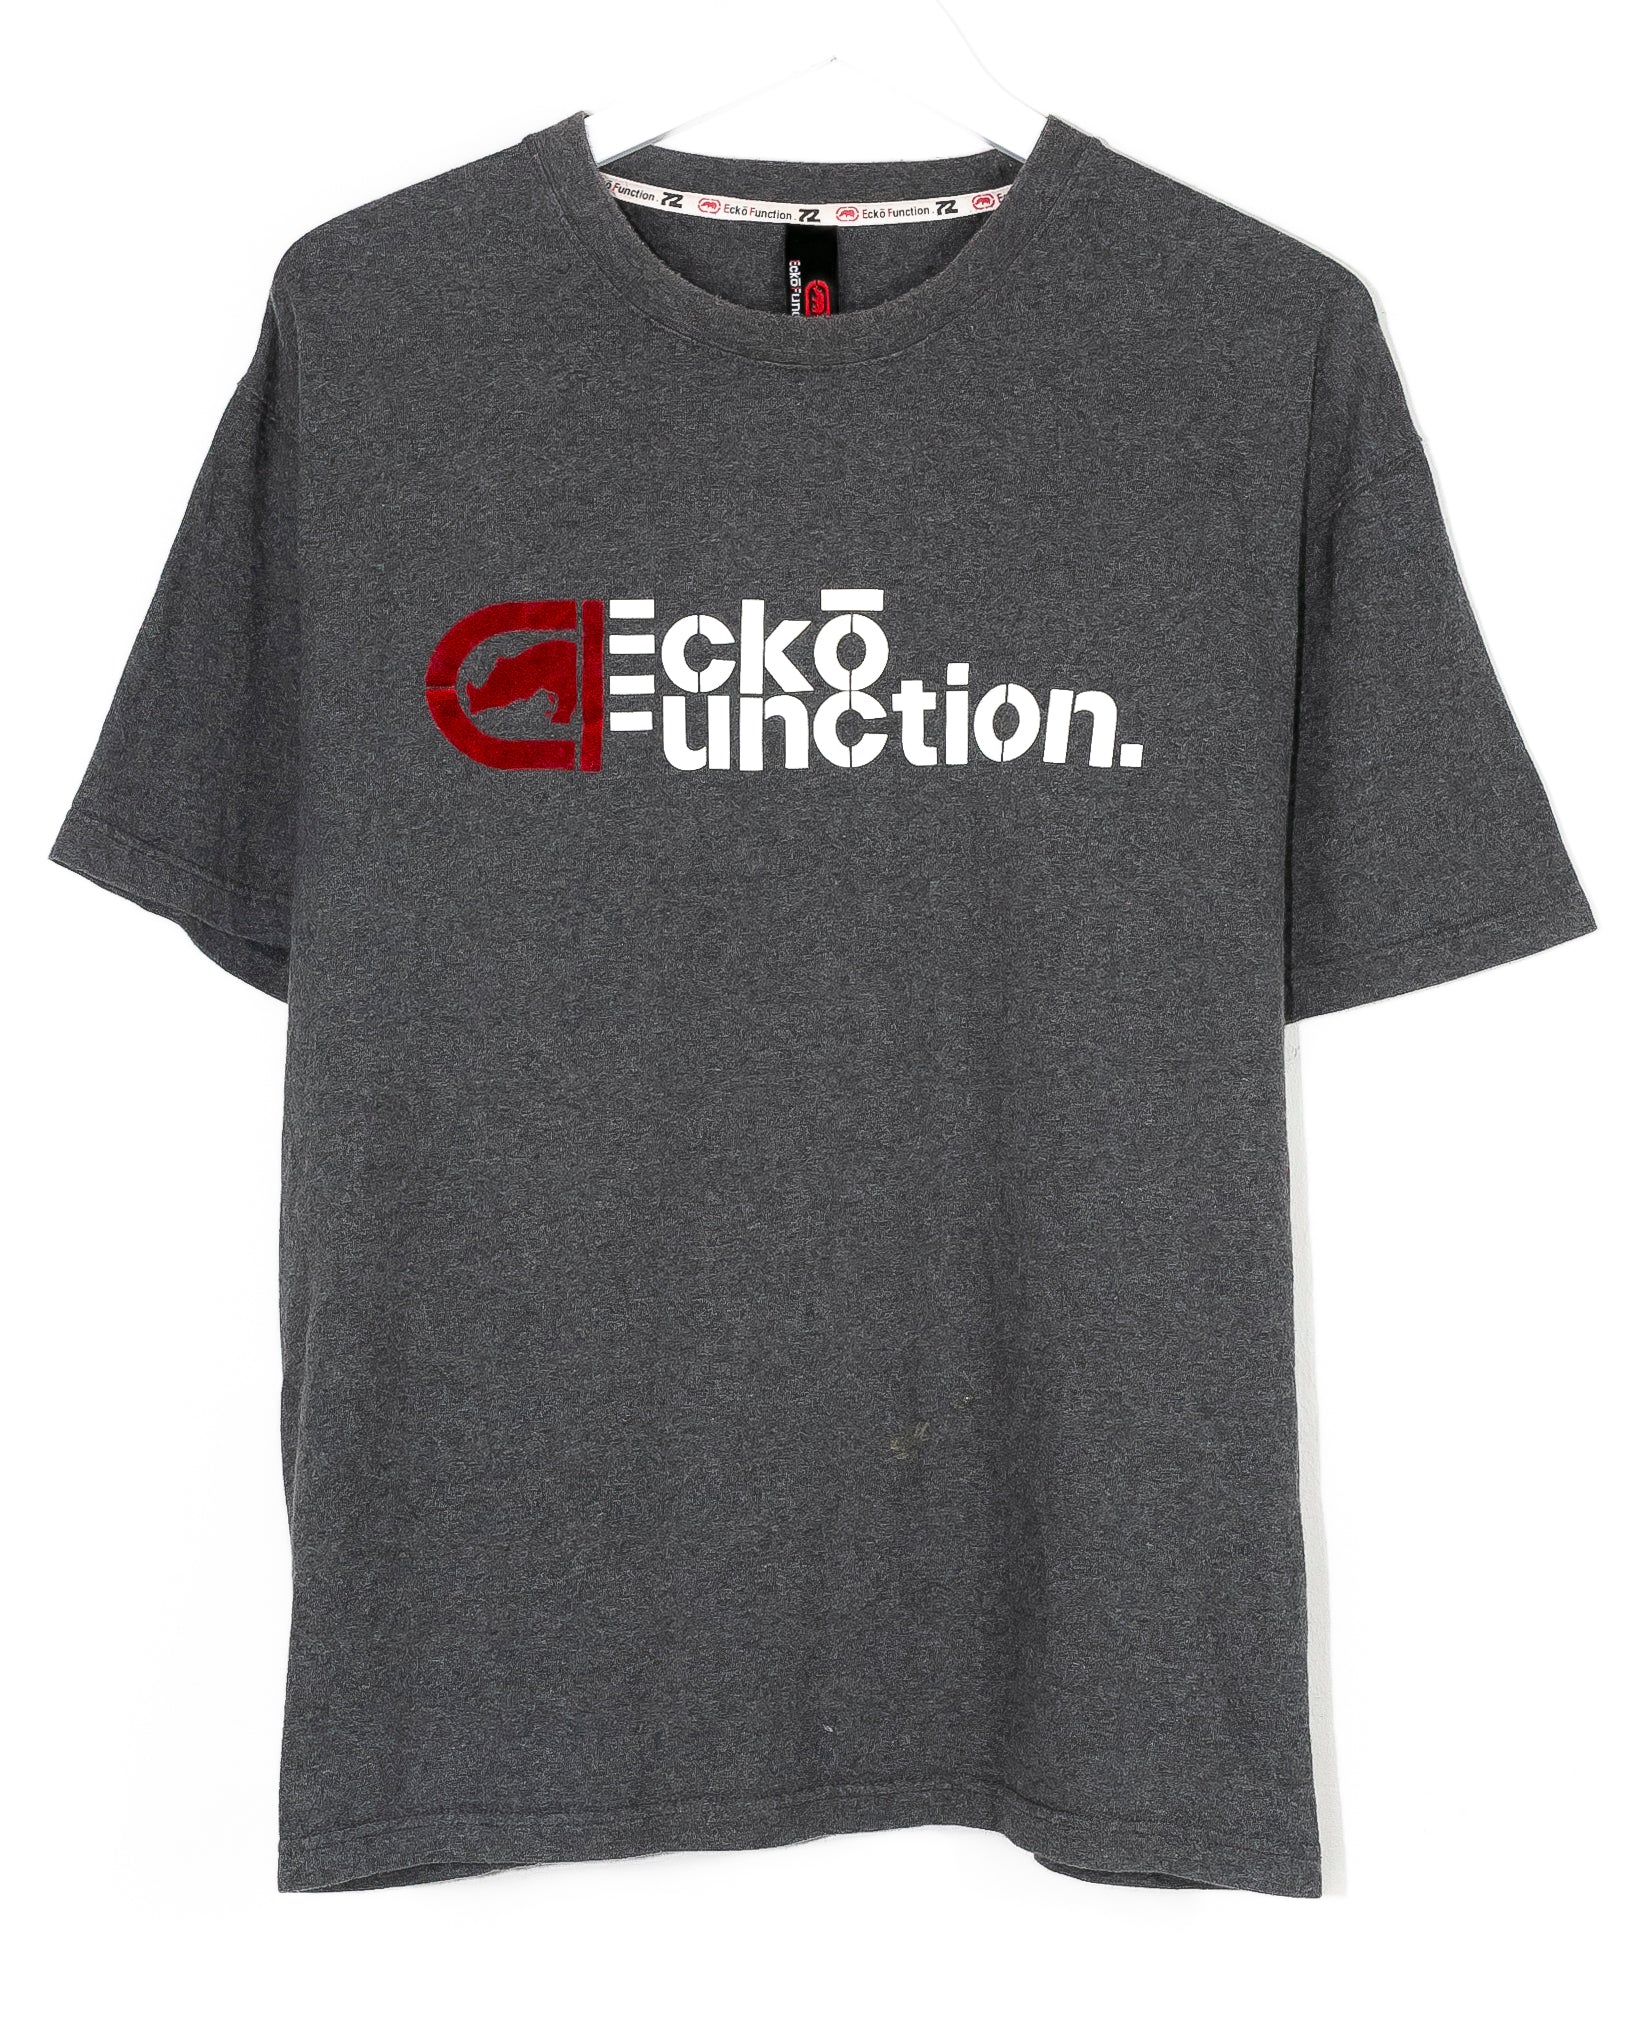 Vintage Ecko T-Shirt (L)